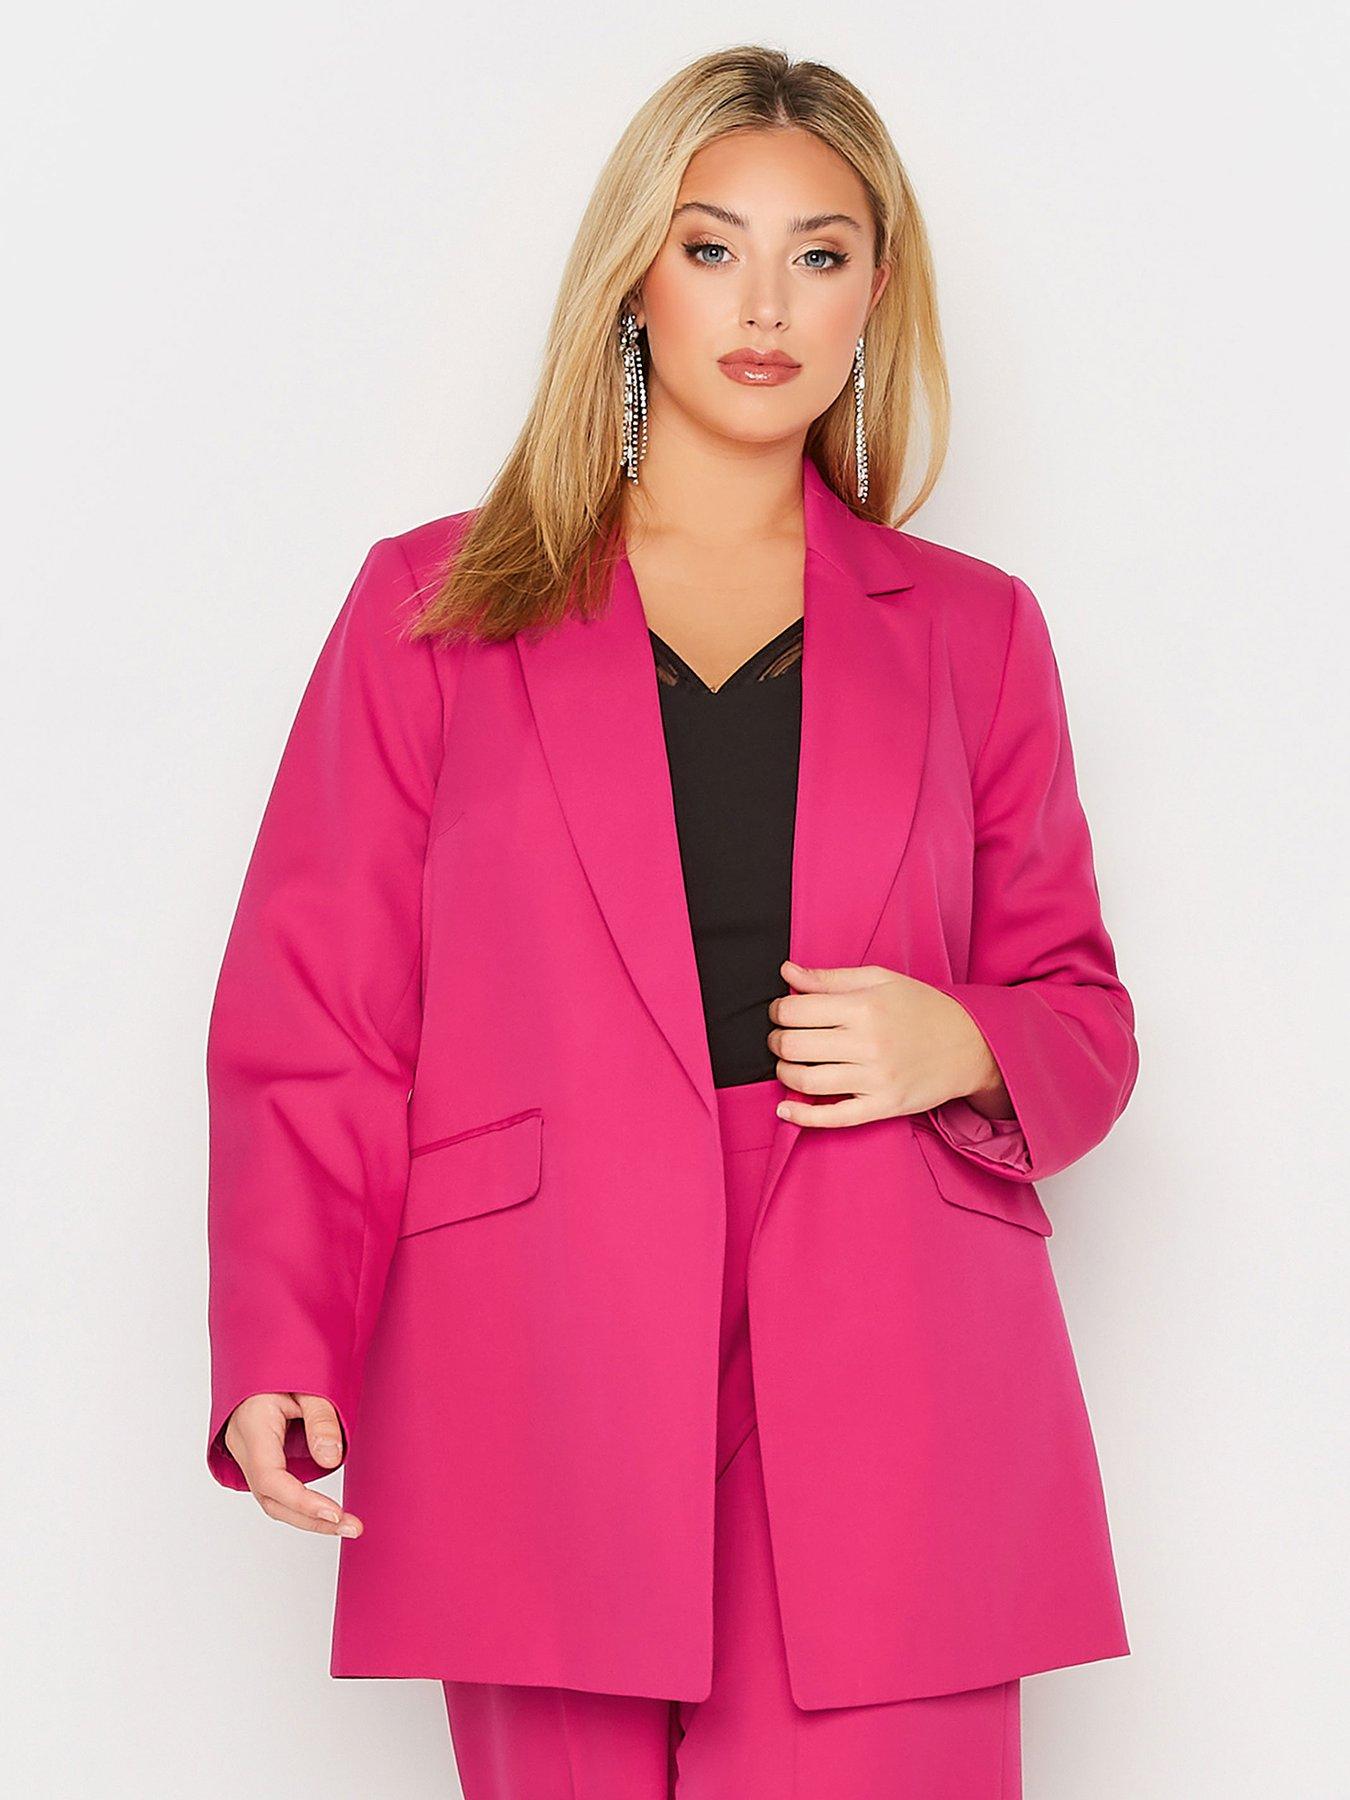 bibiy. pink tailored jacket | www.fleettracktz.com